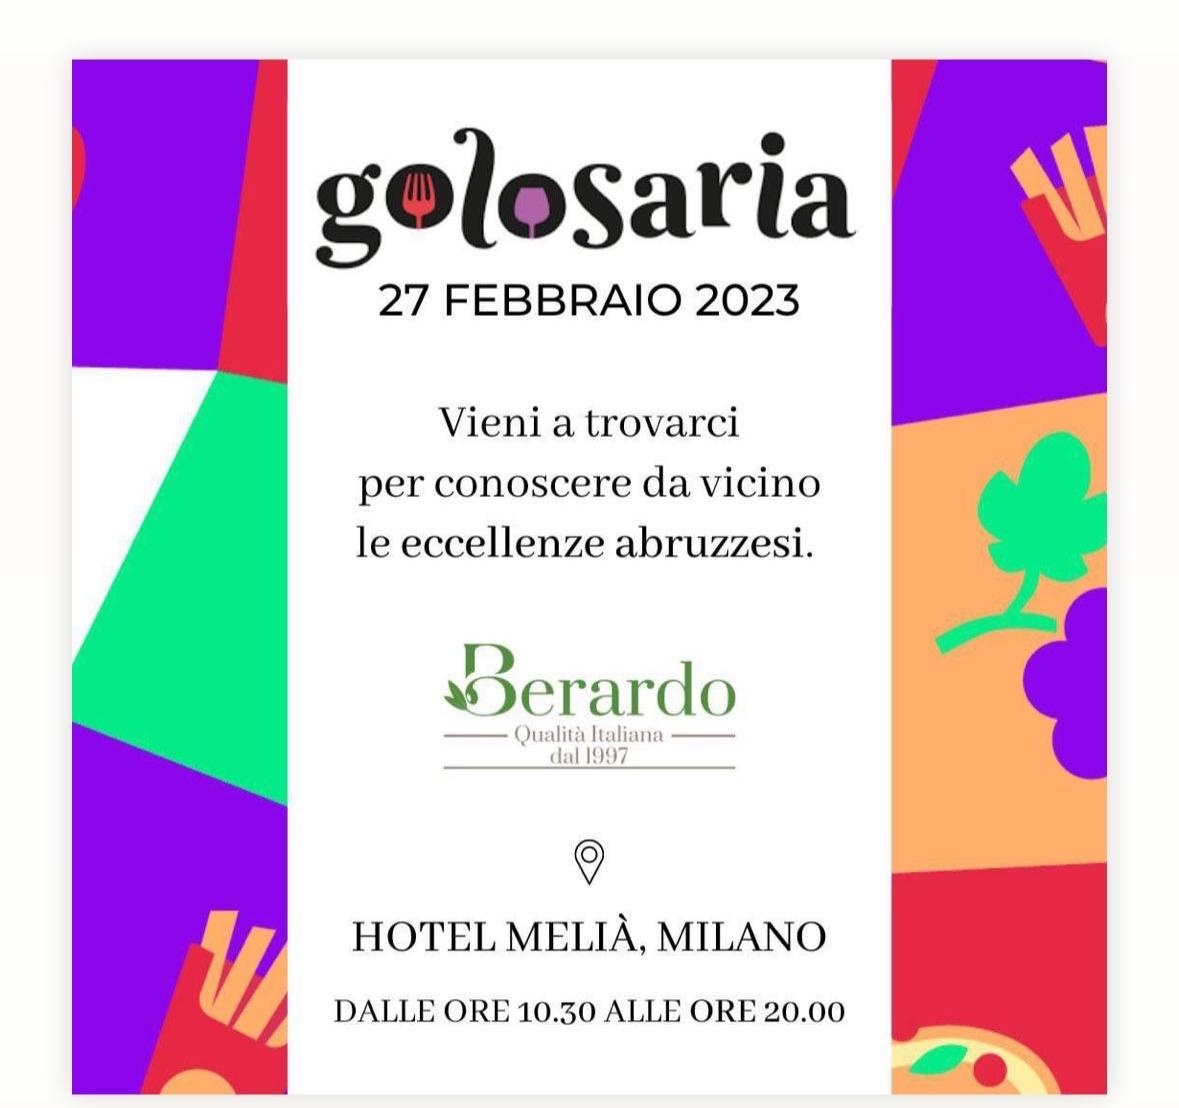 GOLOSARIA WINE & FOOD ABRUZZO 2023 - MILANO, ITALY